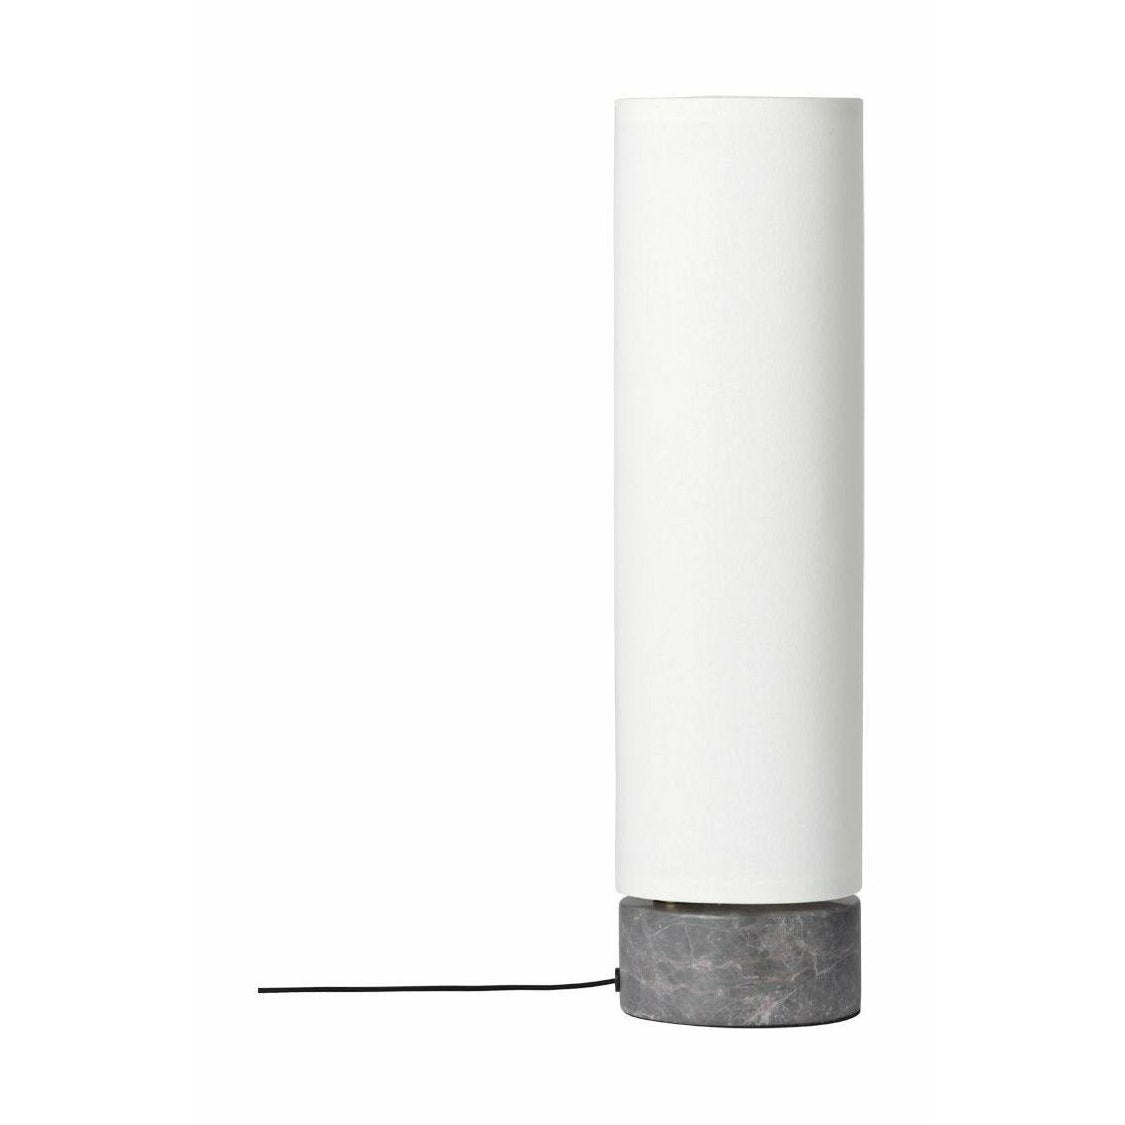 Gubi Unbound Bordlampe ØxH 12x45, Hvid